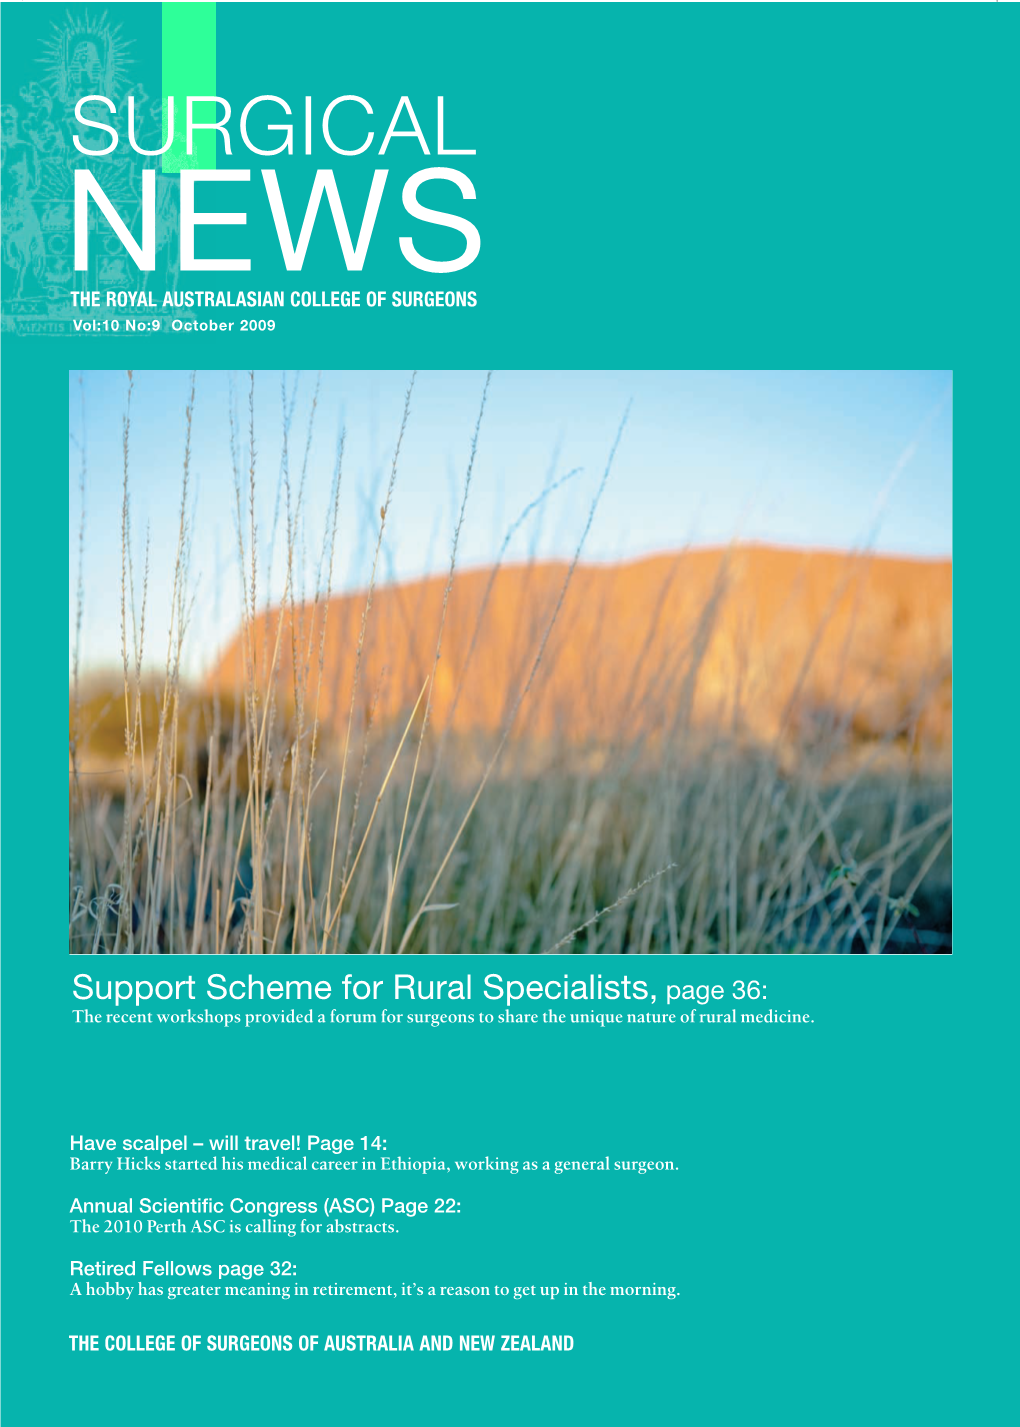 October 2009 2009 No:9 October Vol:10 Support Scheme for Rural Specialists, of Rural Medicine